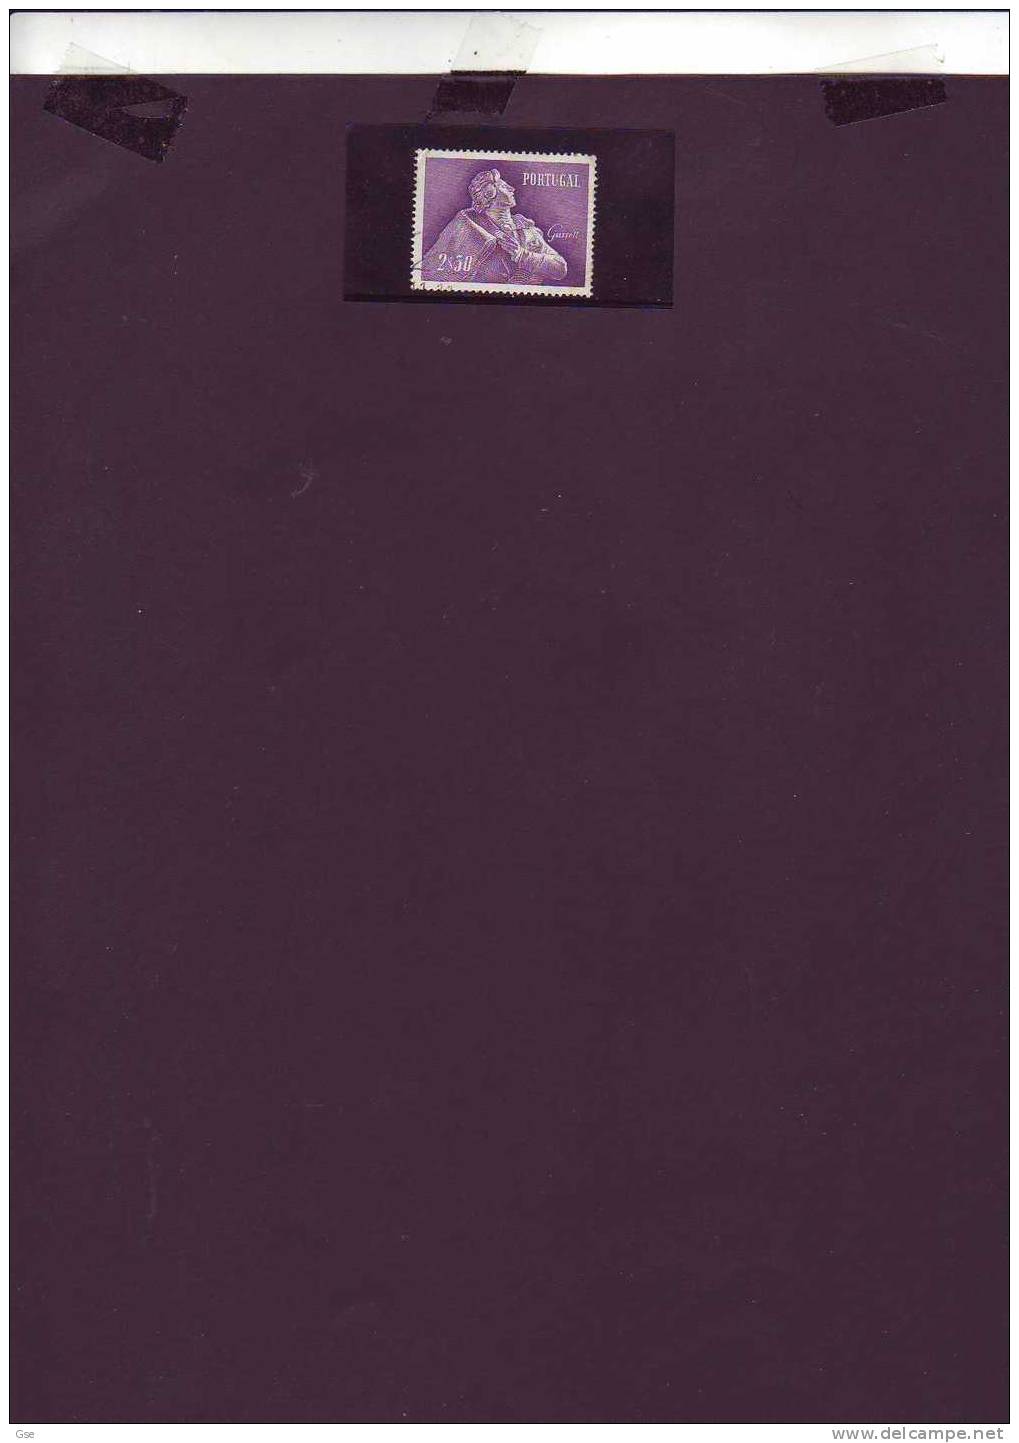 PORTOGALLO  1957 - Yvert   838° - Garrret - Poeta - Politica - Used Stamps